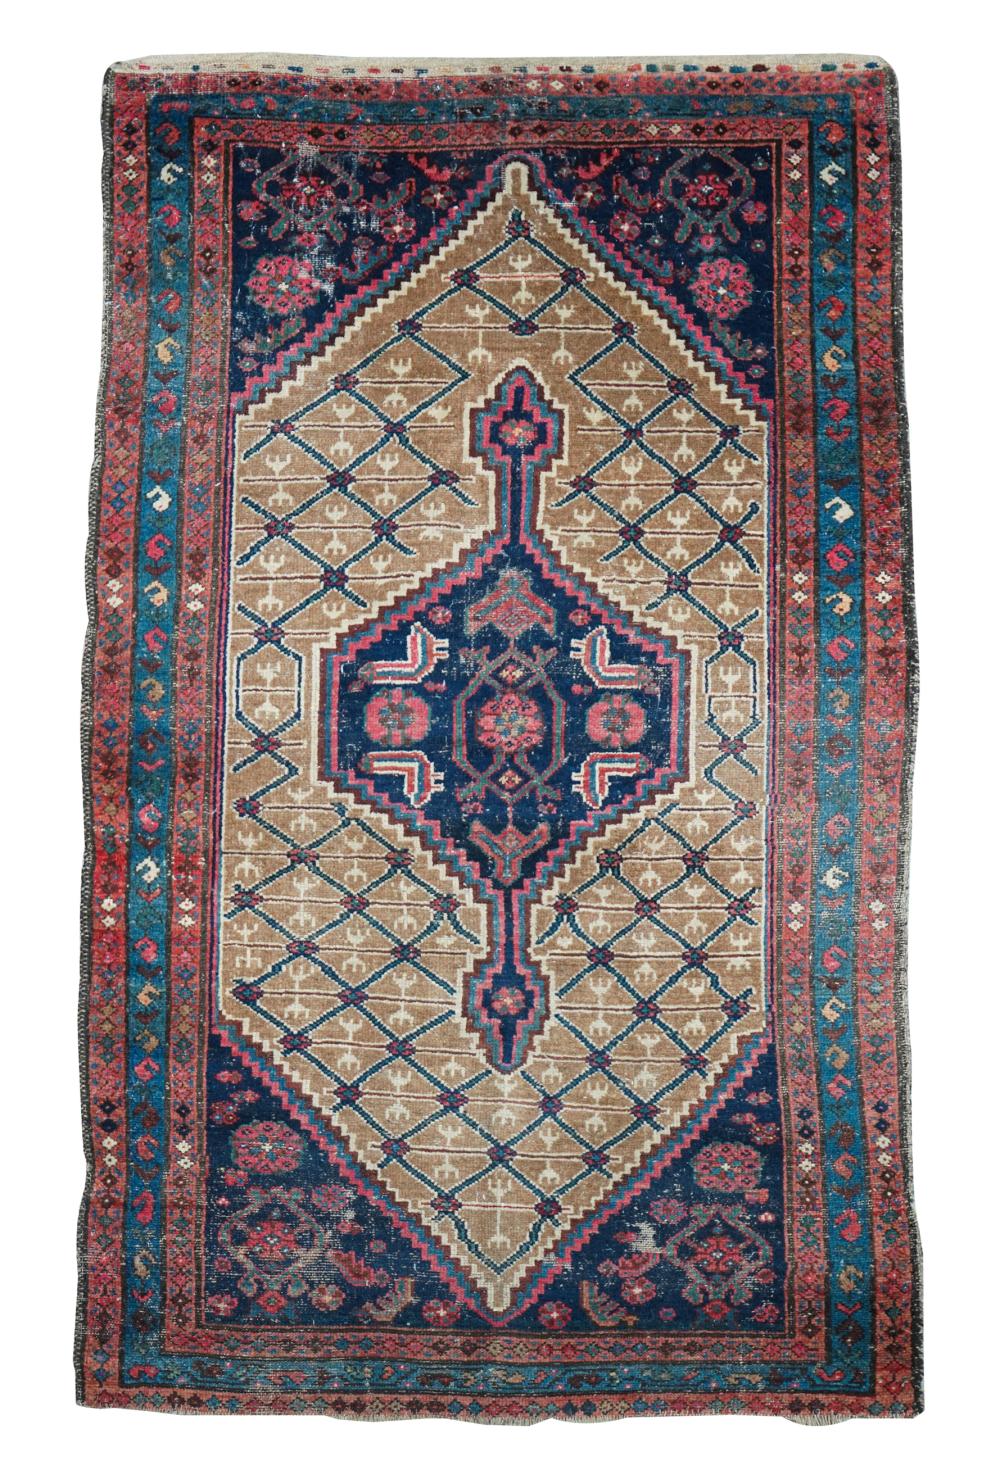 TURKISH RUGwool on wool; 6'8 x